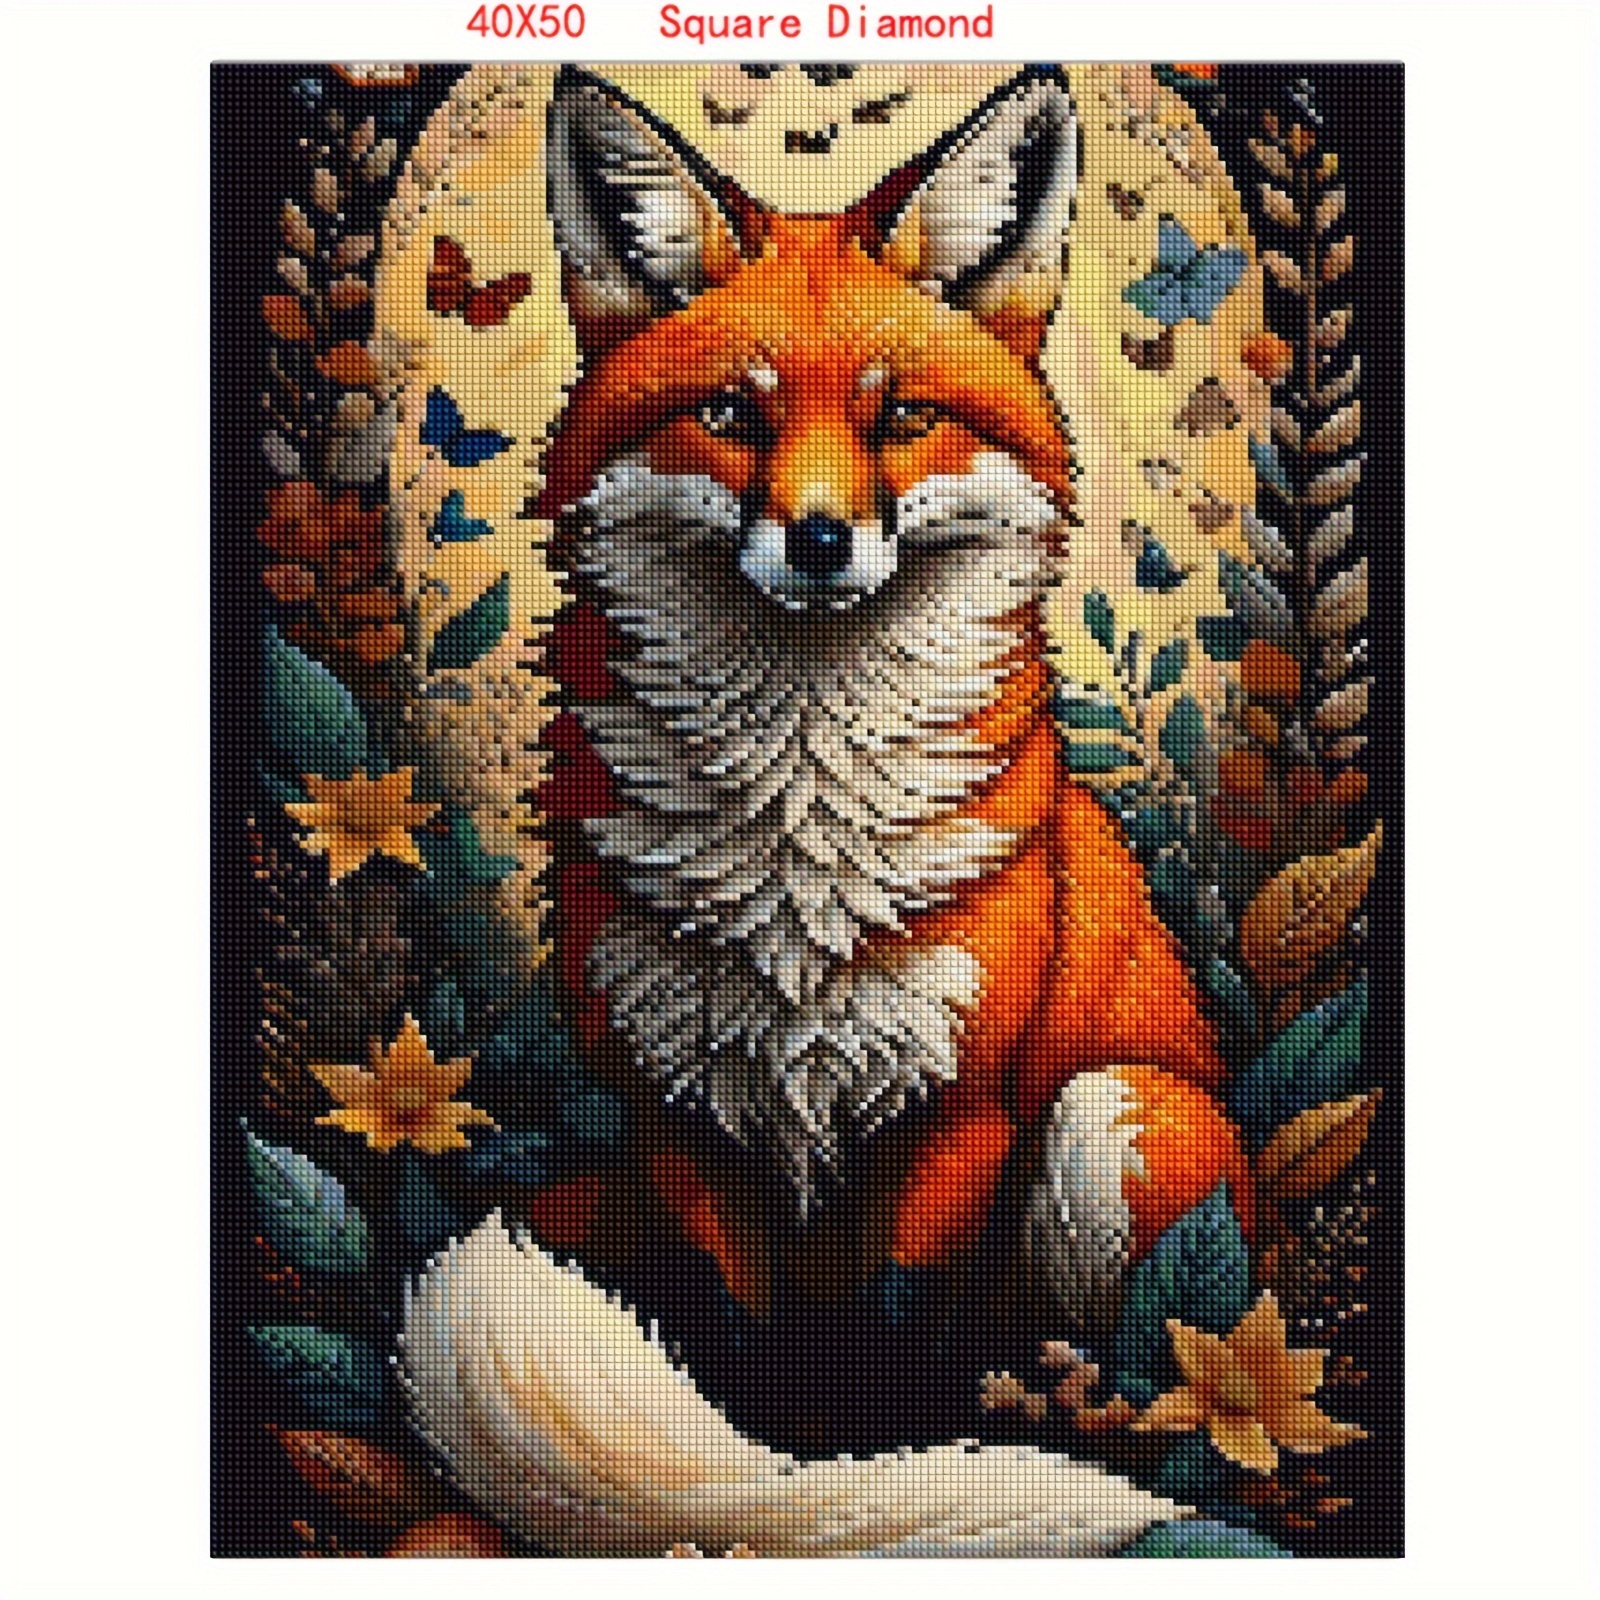 Fox Diamond Painting Kits for Adults, Animal DIY Diamond Art Kits Full fox